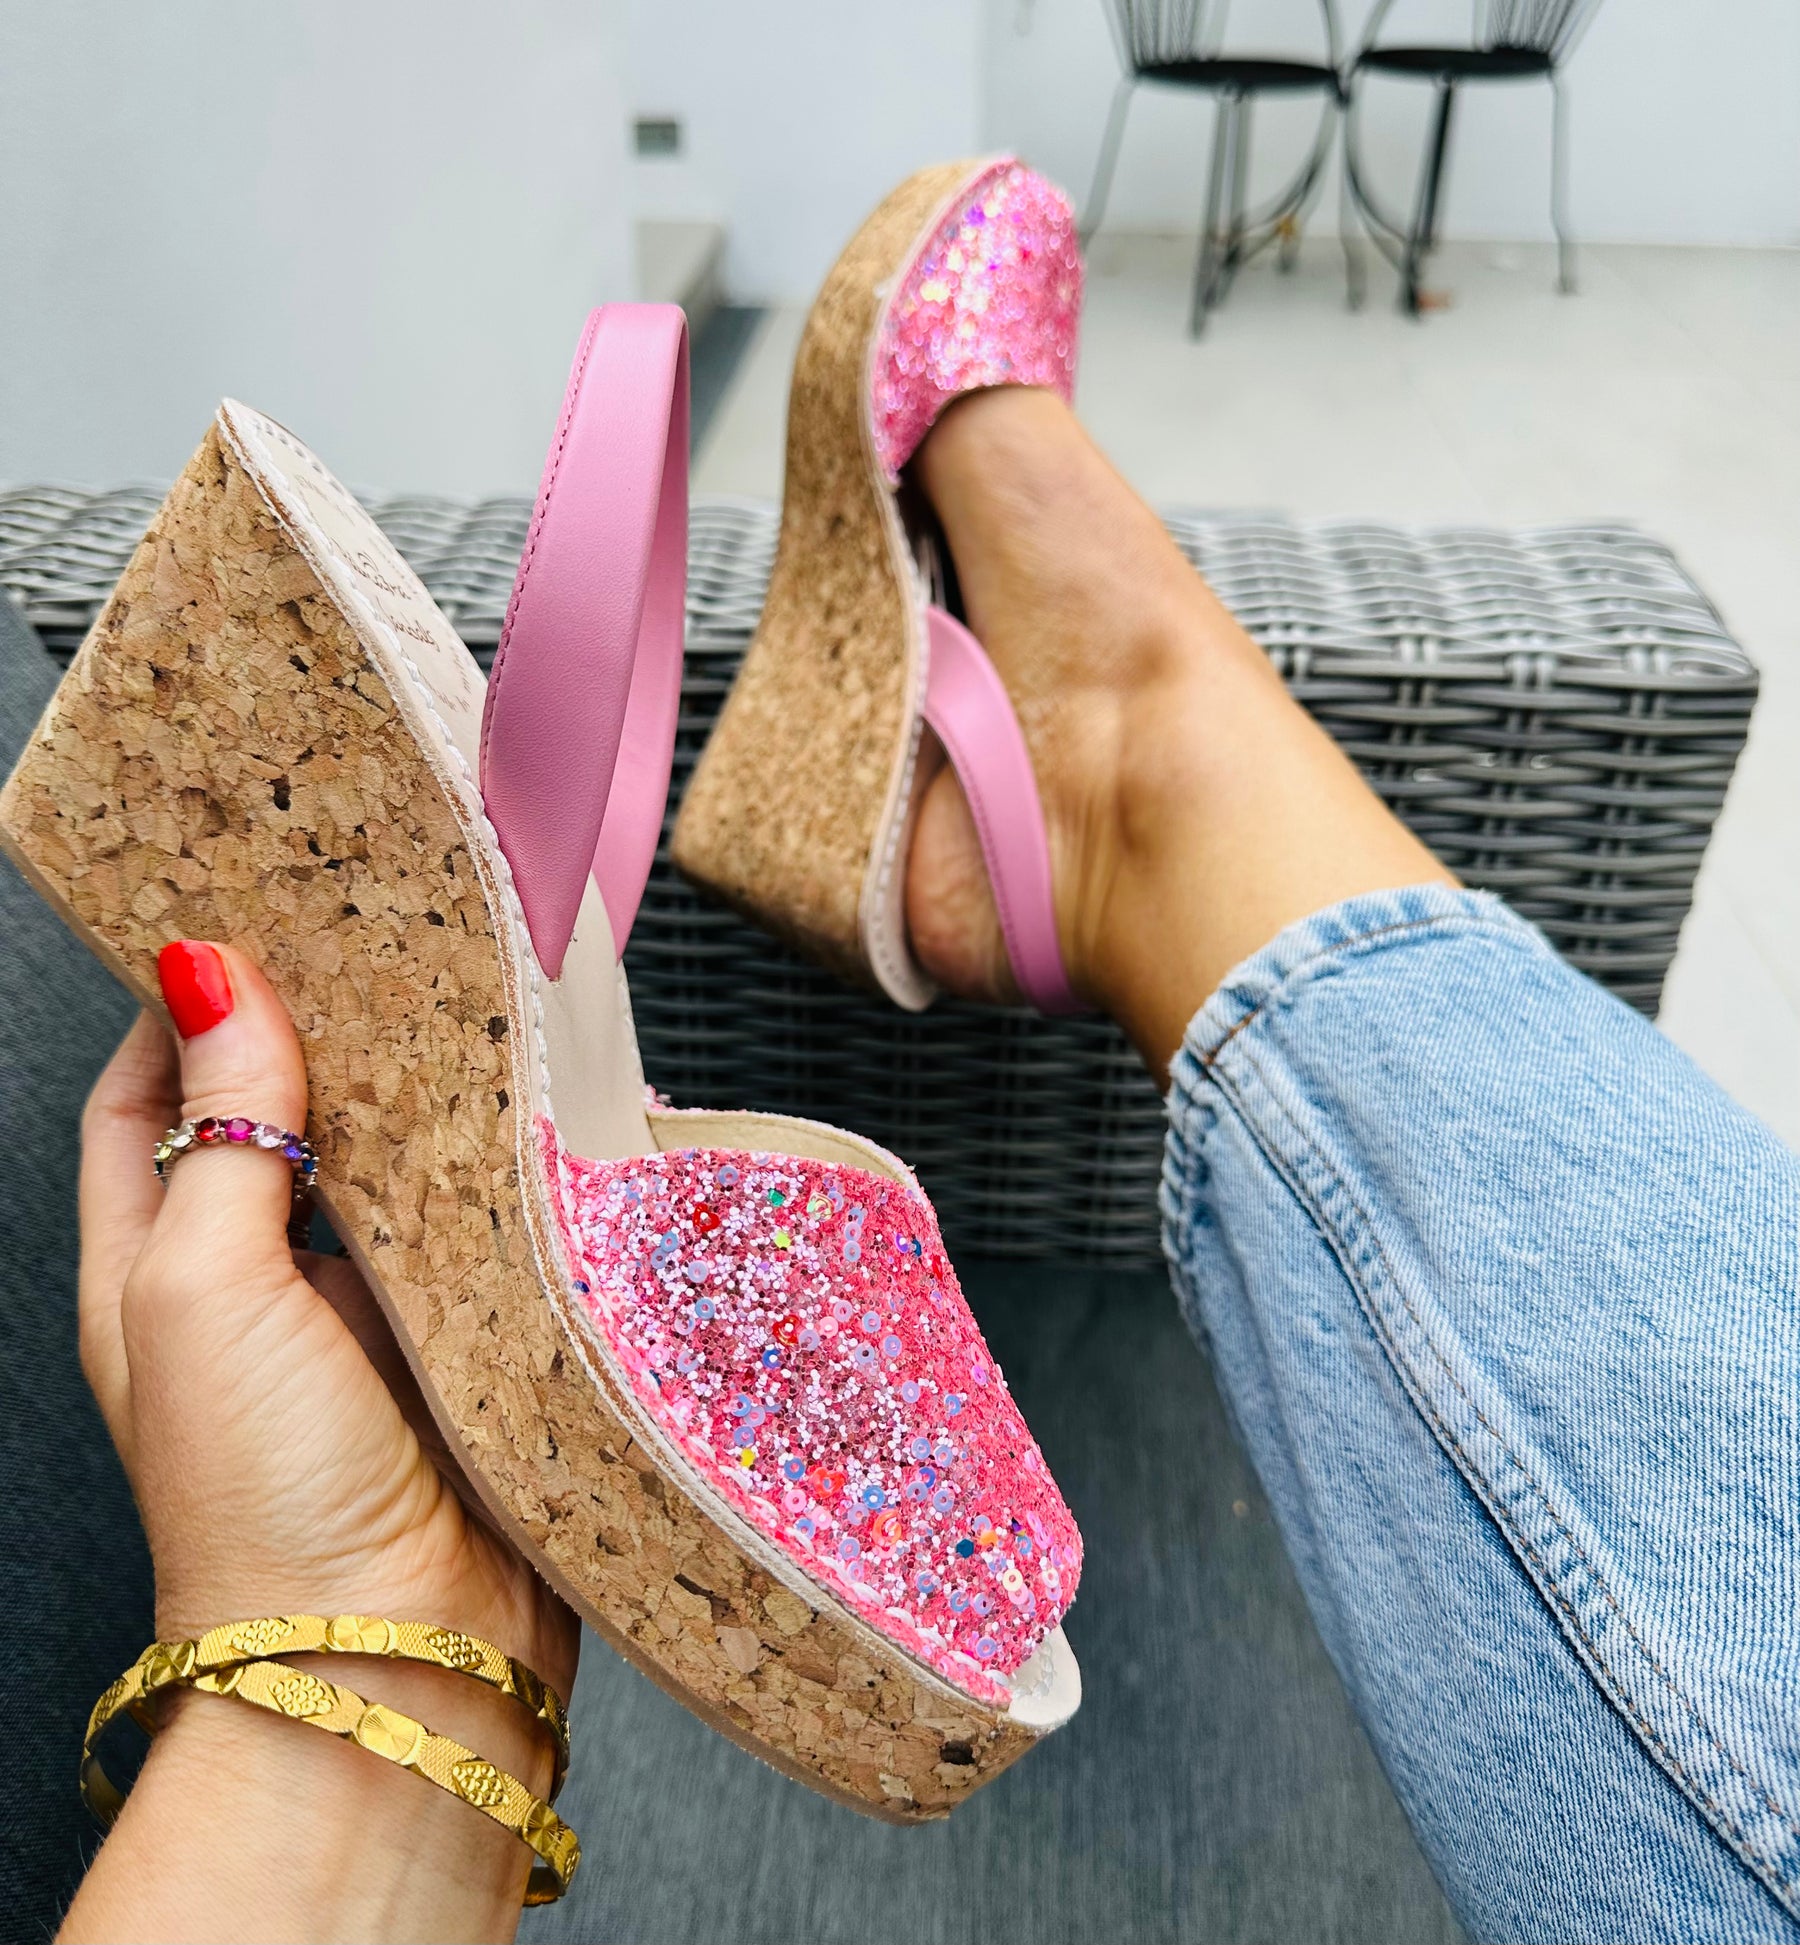 Iridescent candy pink glitter with a soft bubblegum pink leather heel strap. Comfortable, lightweight medium height cork wedge platform avarca sandals